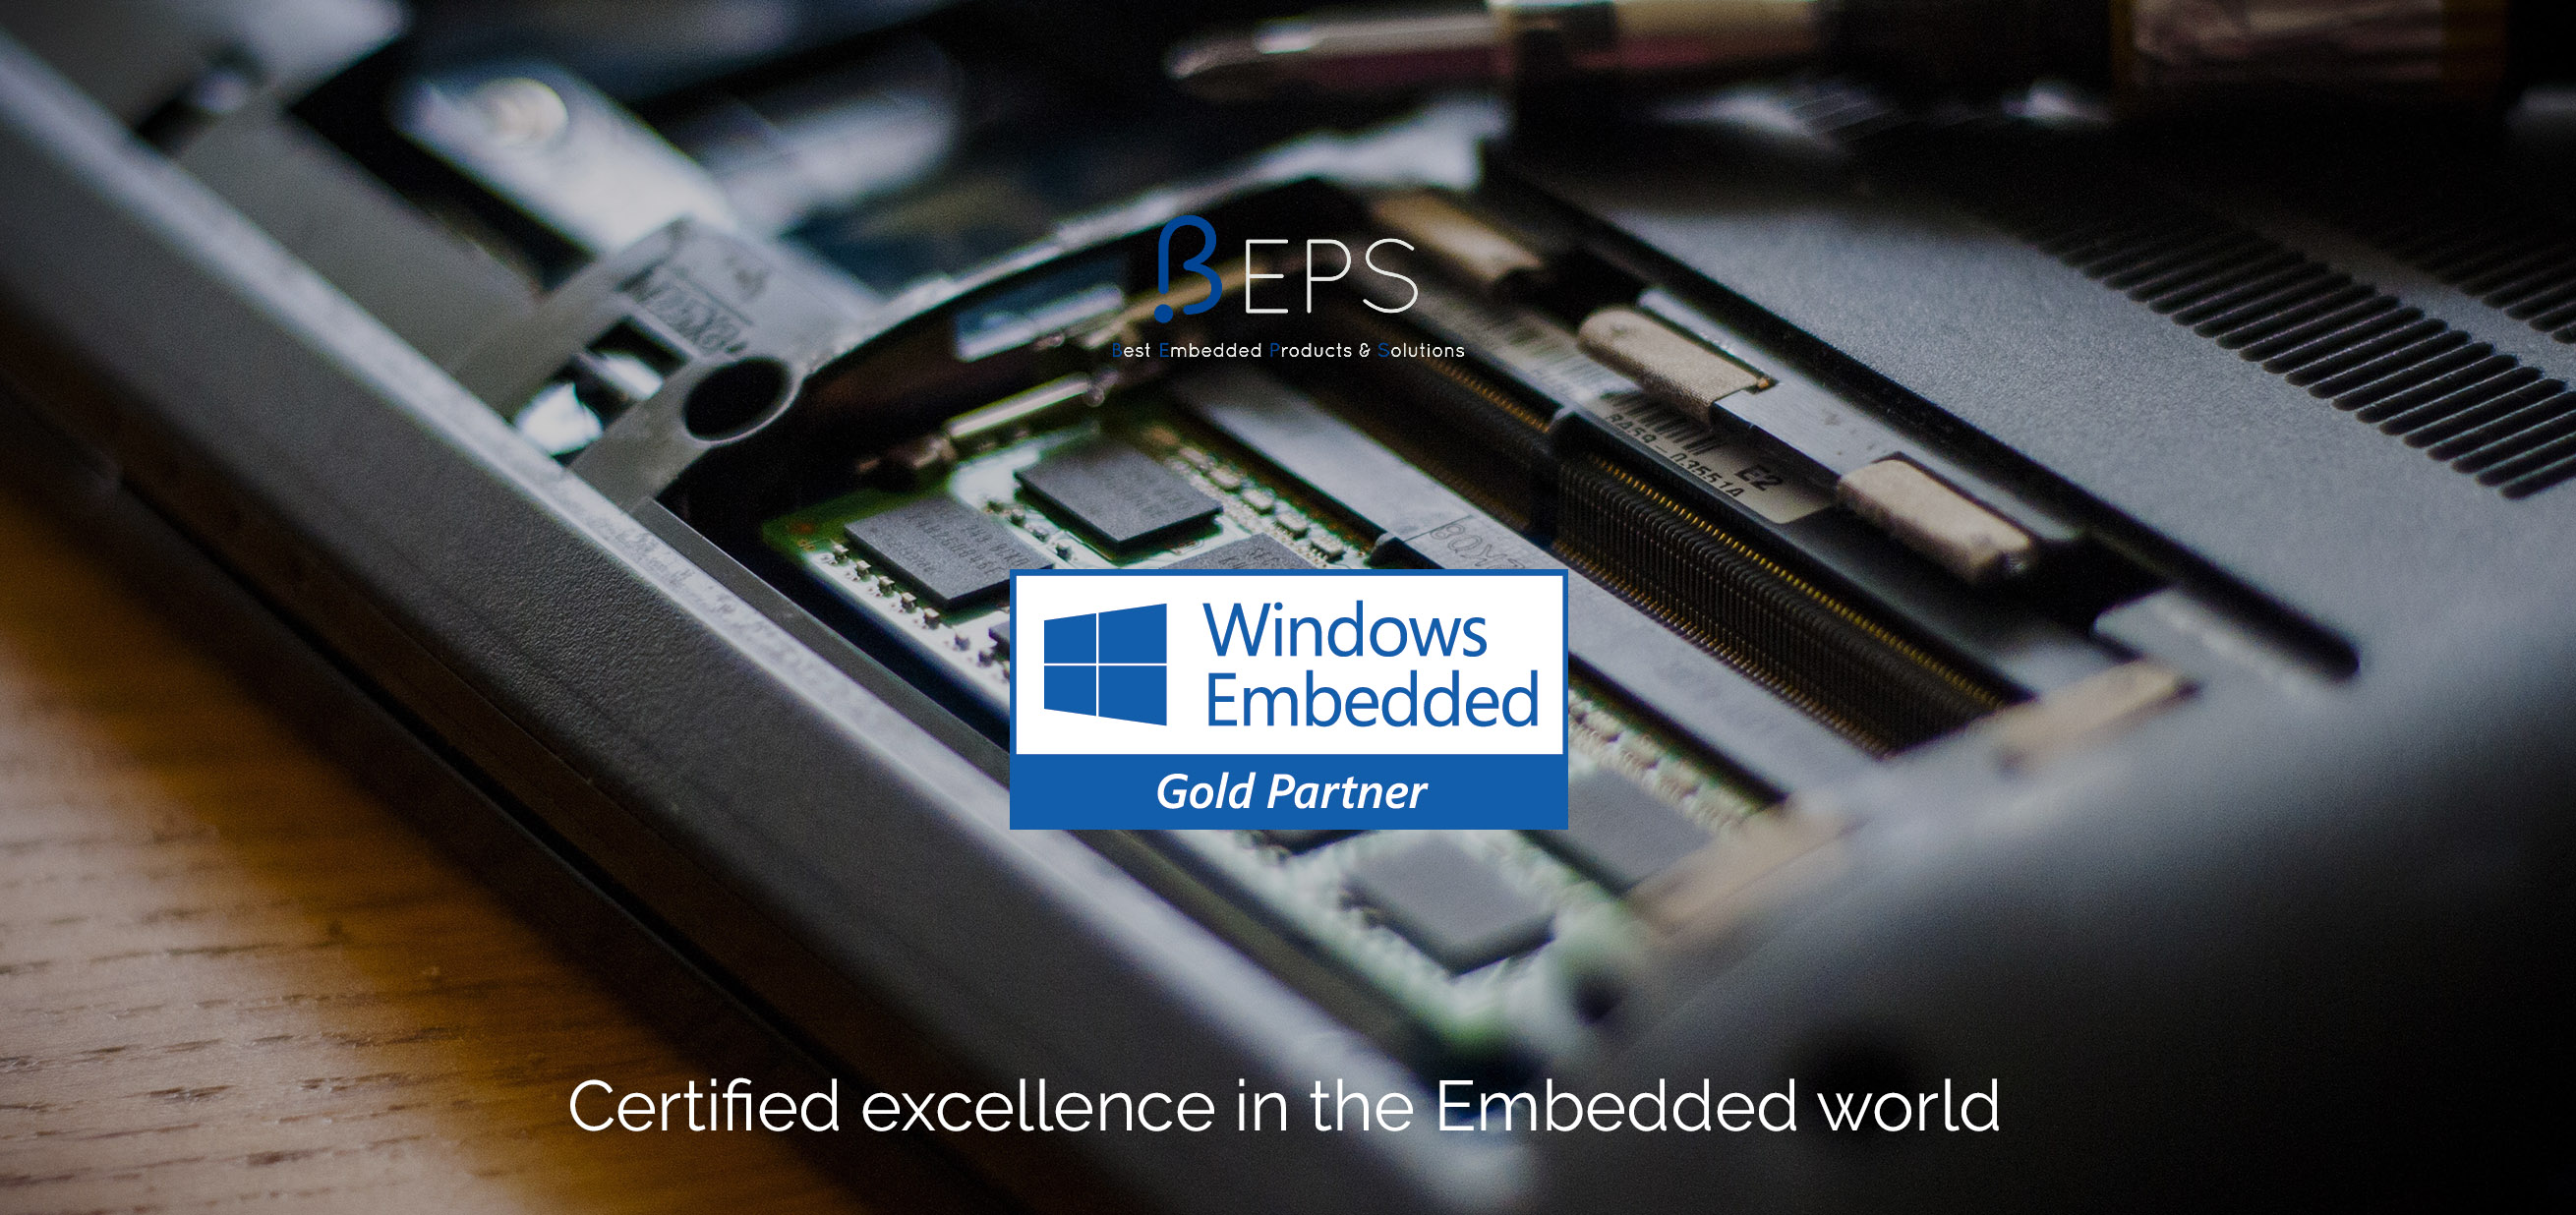 Beps Microsoft Embedded Gold Partner